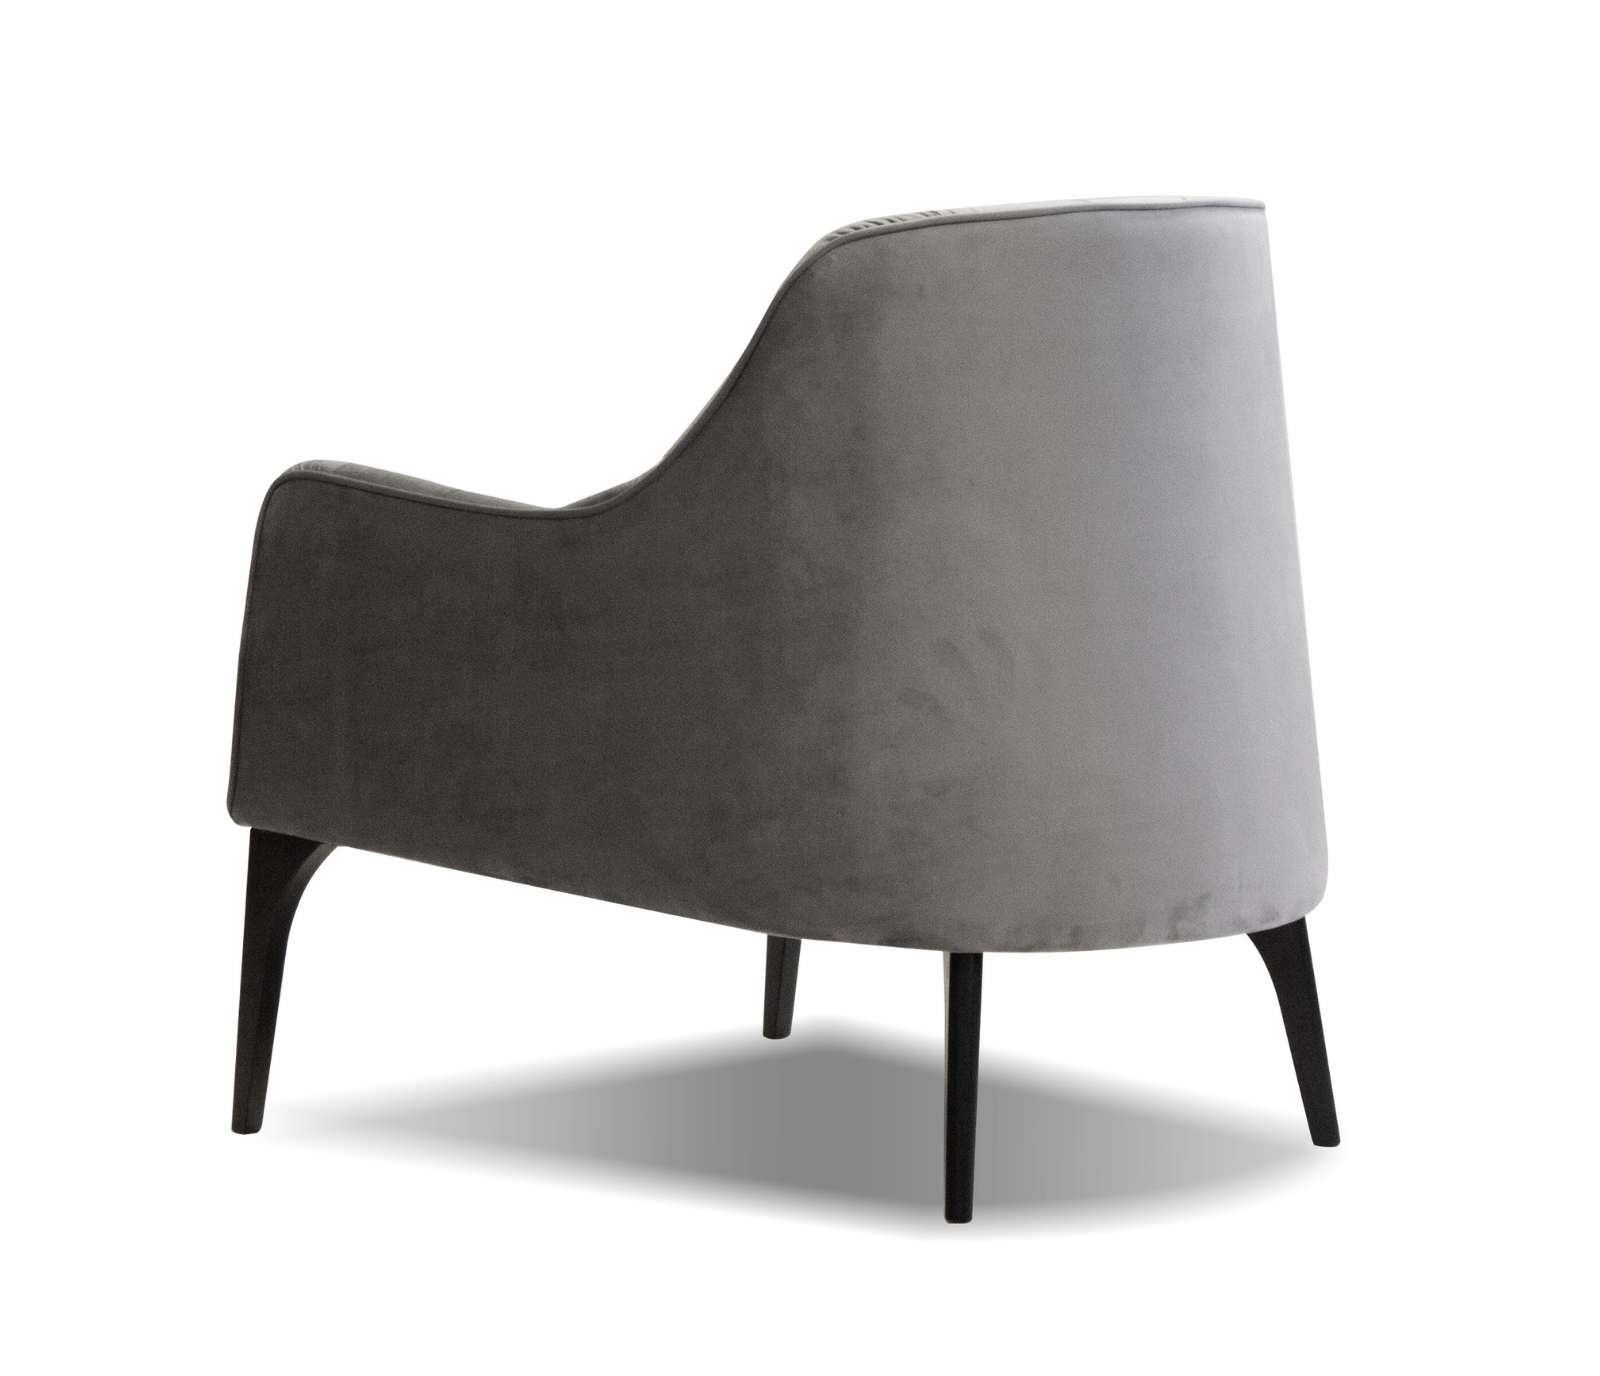 Ellington Accent Chair - Pewter Velvet Fabric